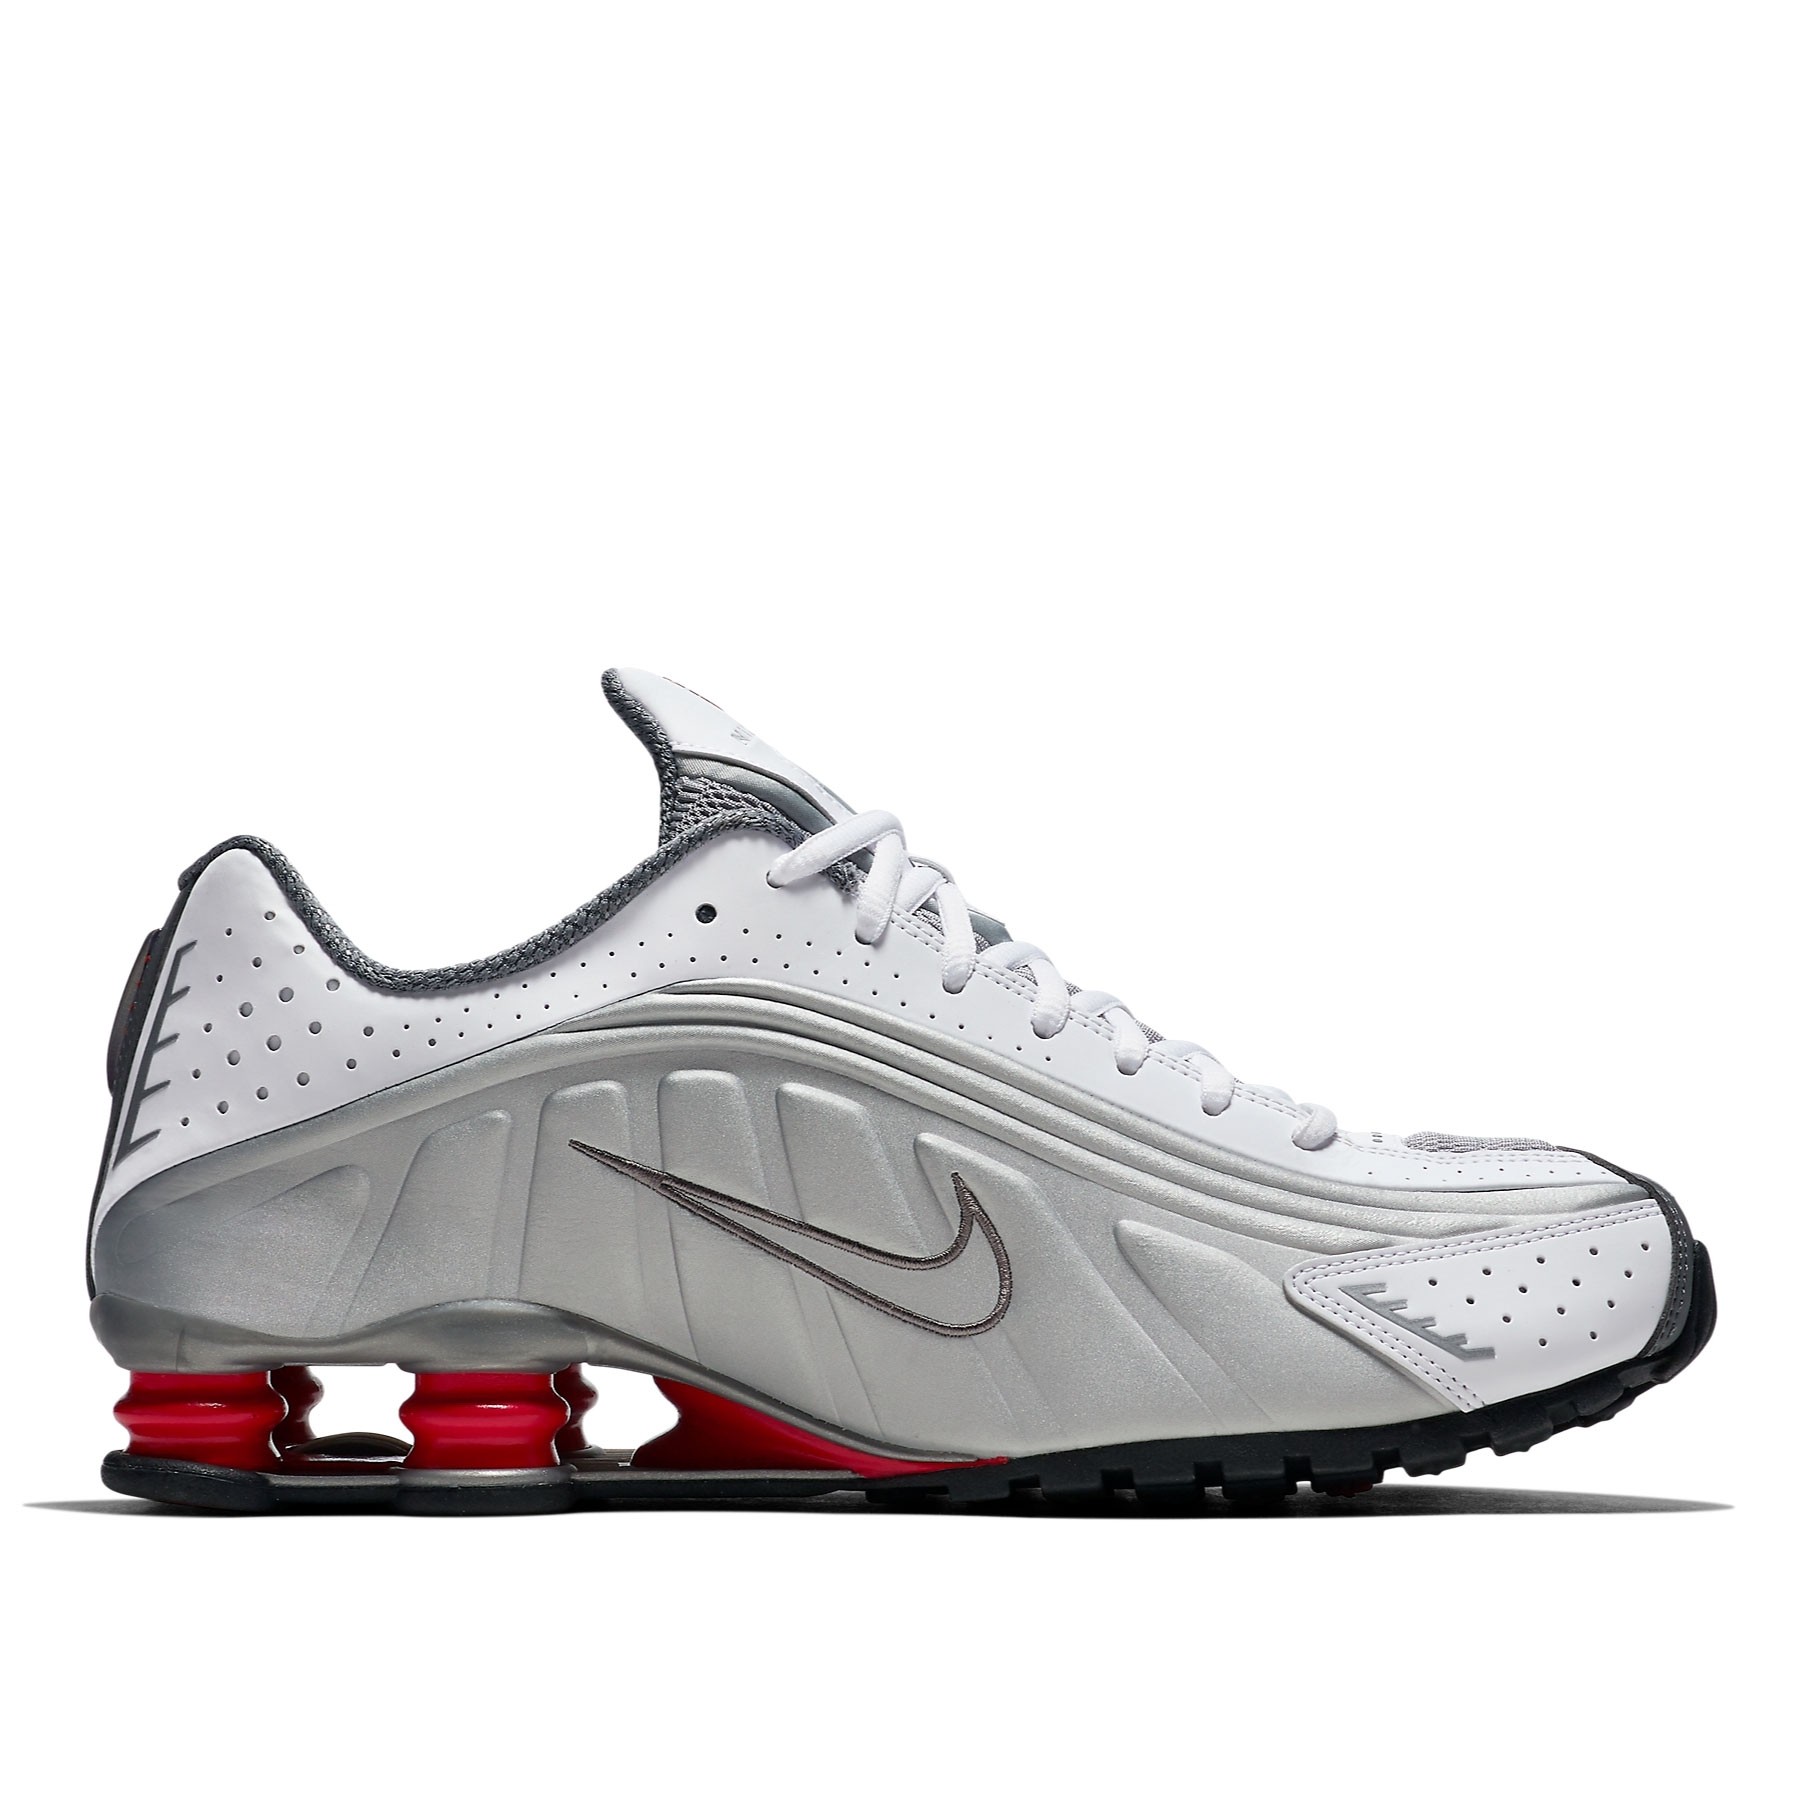 Very Goods | Nike Shox R4 (White)